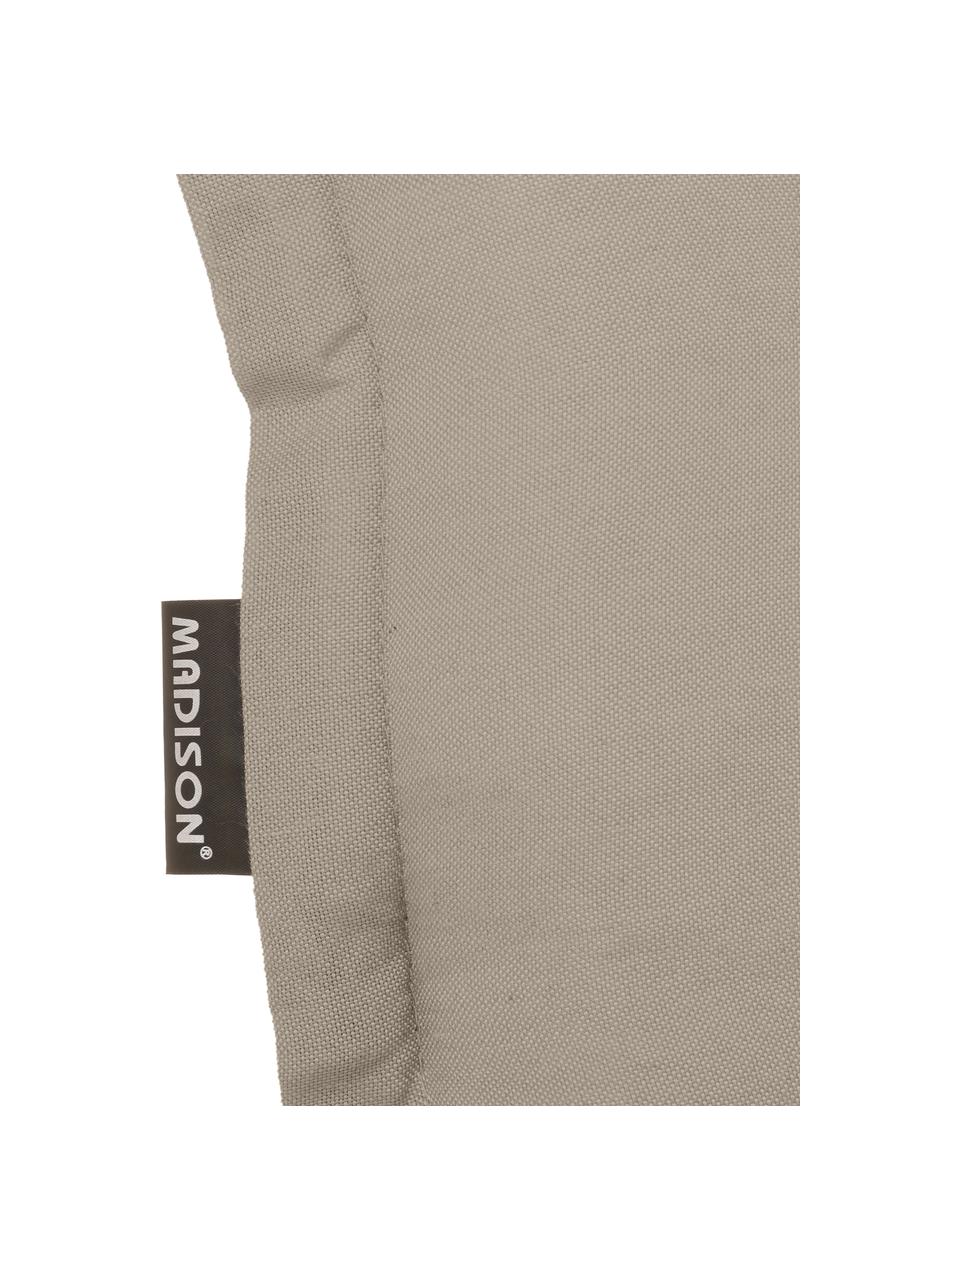 Einfarbige Hochlehner-Stuhlauflage Panama, Bezug: 50% Baumwolle, 50% Polyes, Beige, B 42 x L 120 cm